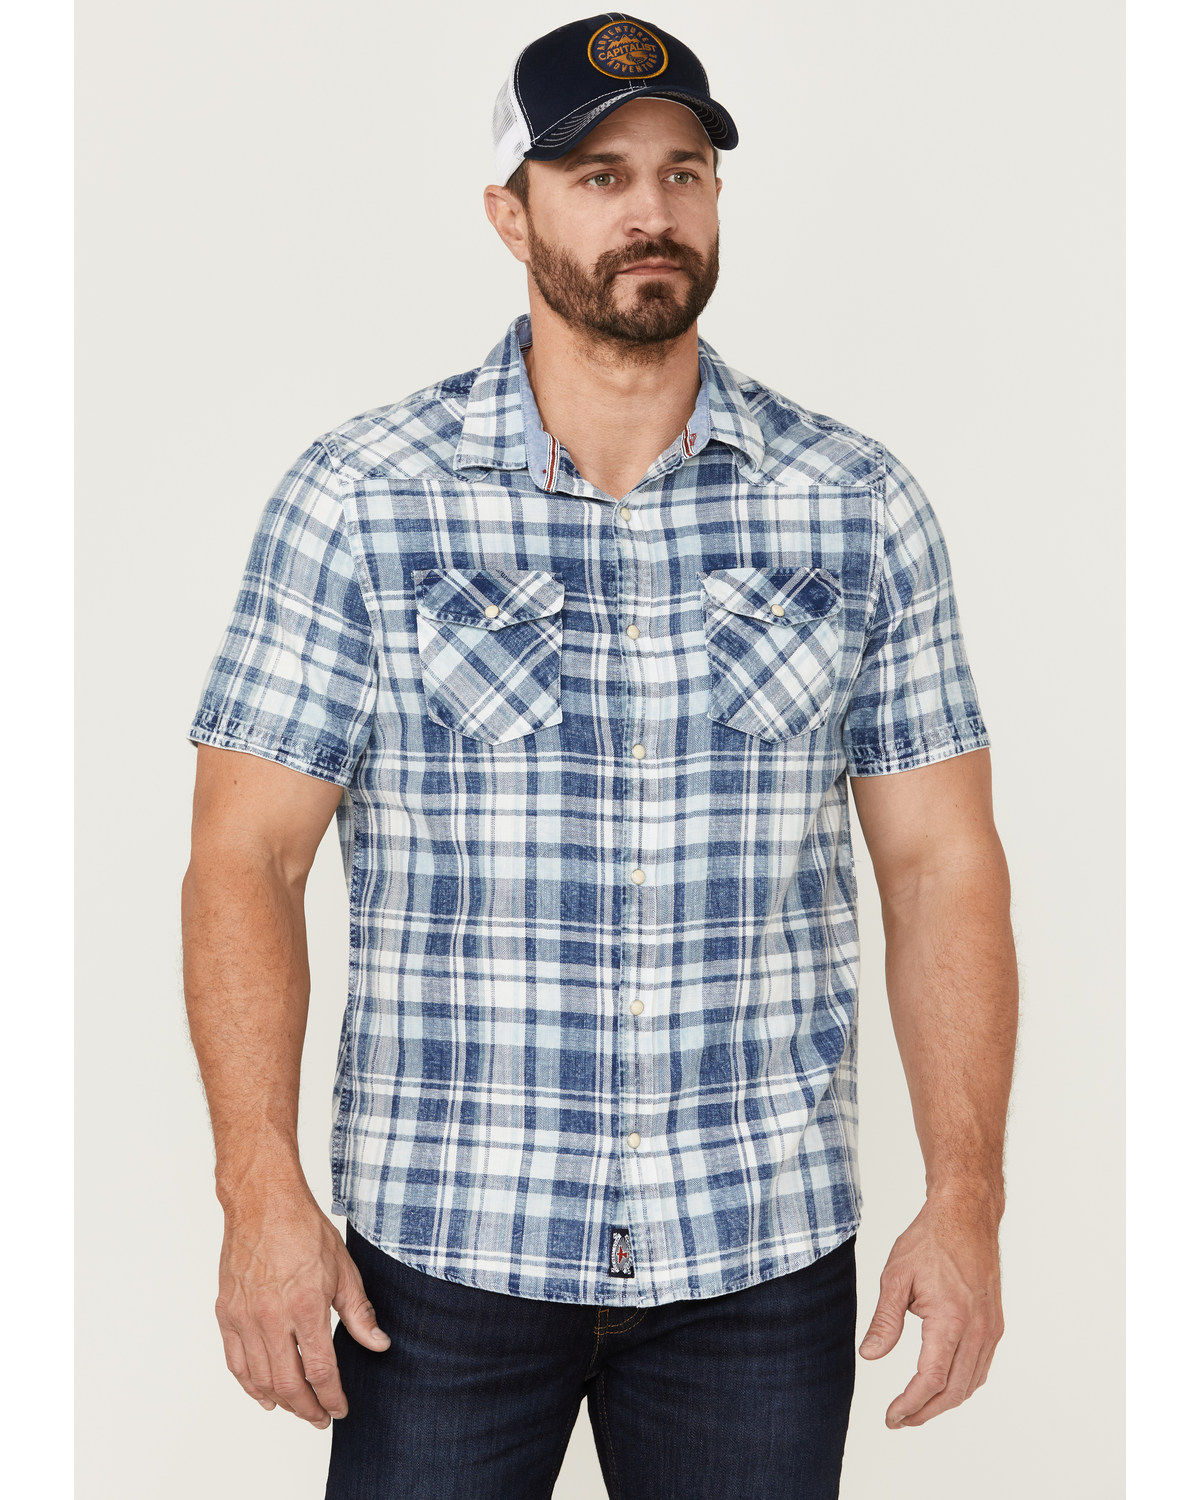 Flag & Anthem Men's Bartlett Vintage Plaid Short Sleeve Snap Western Shirt